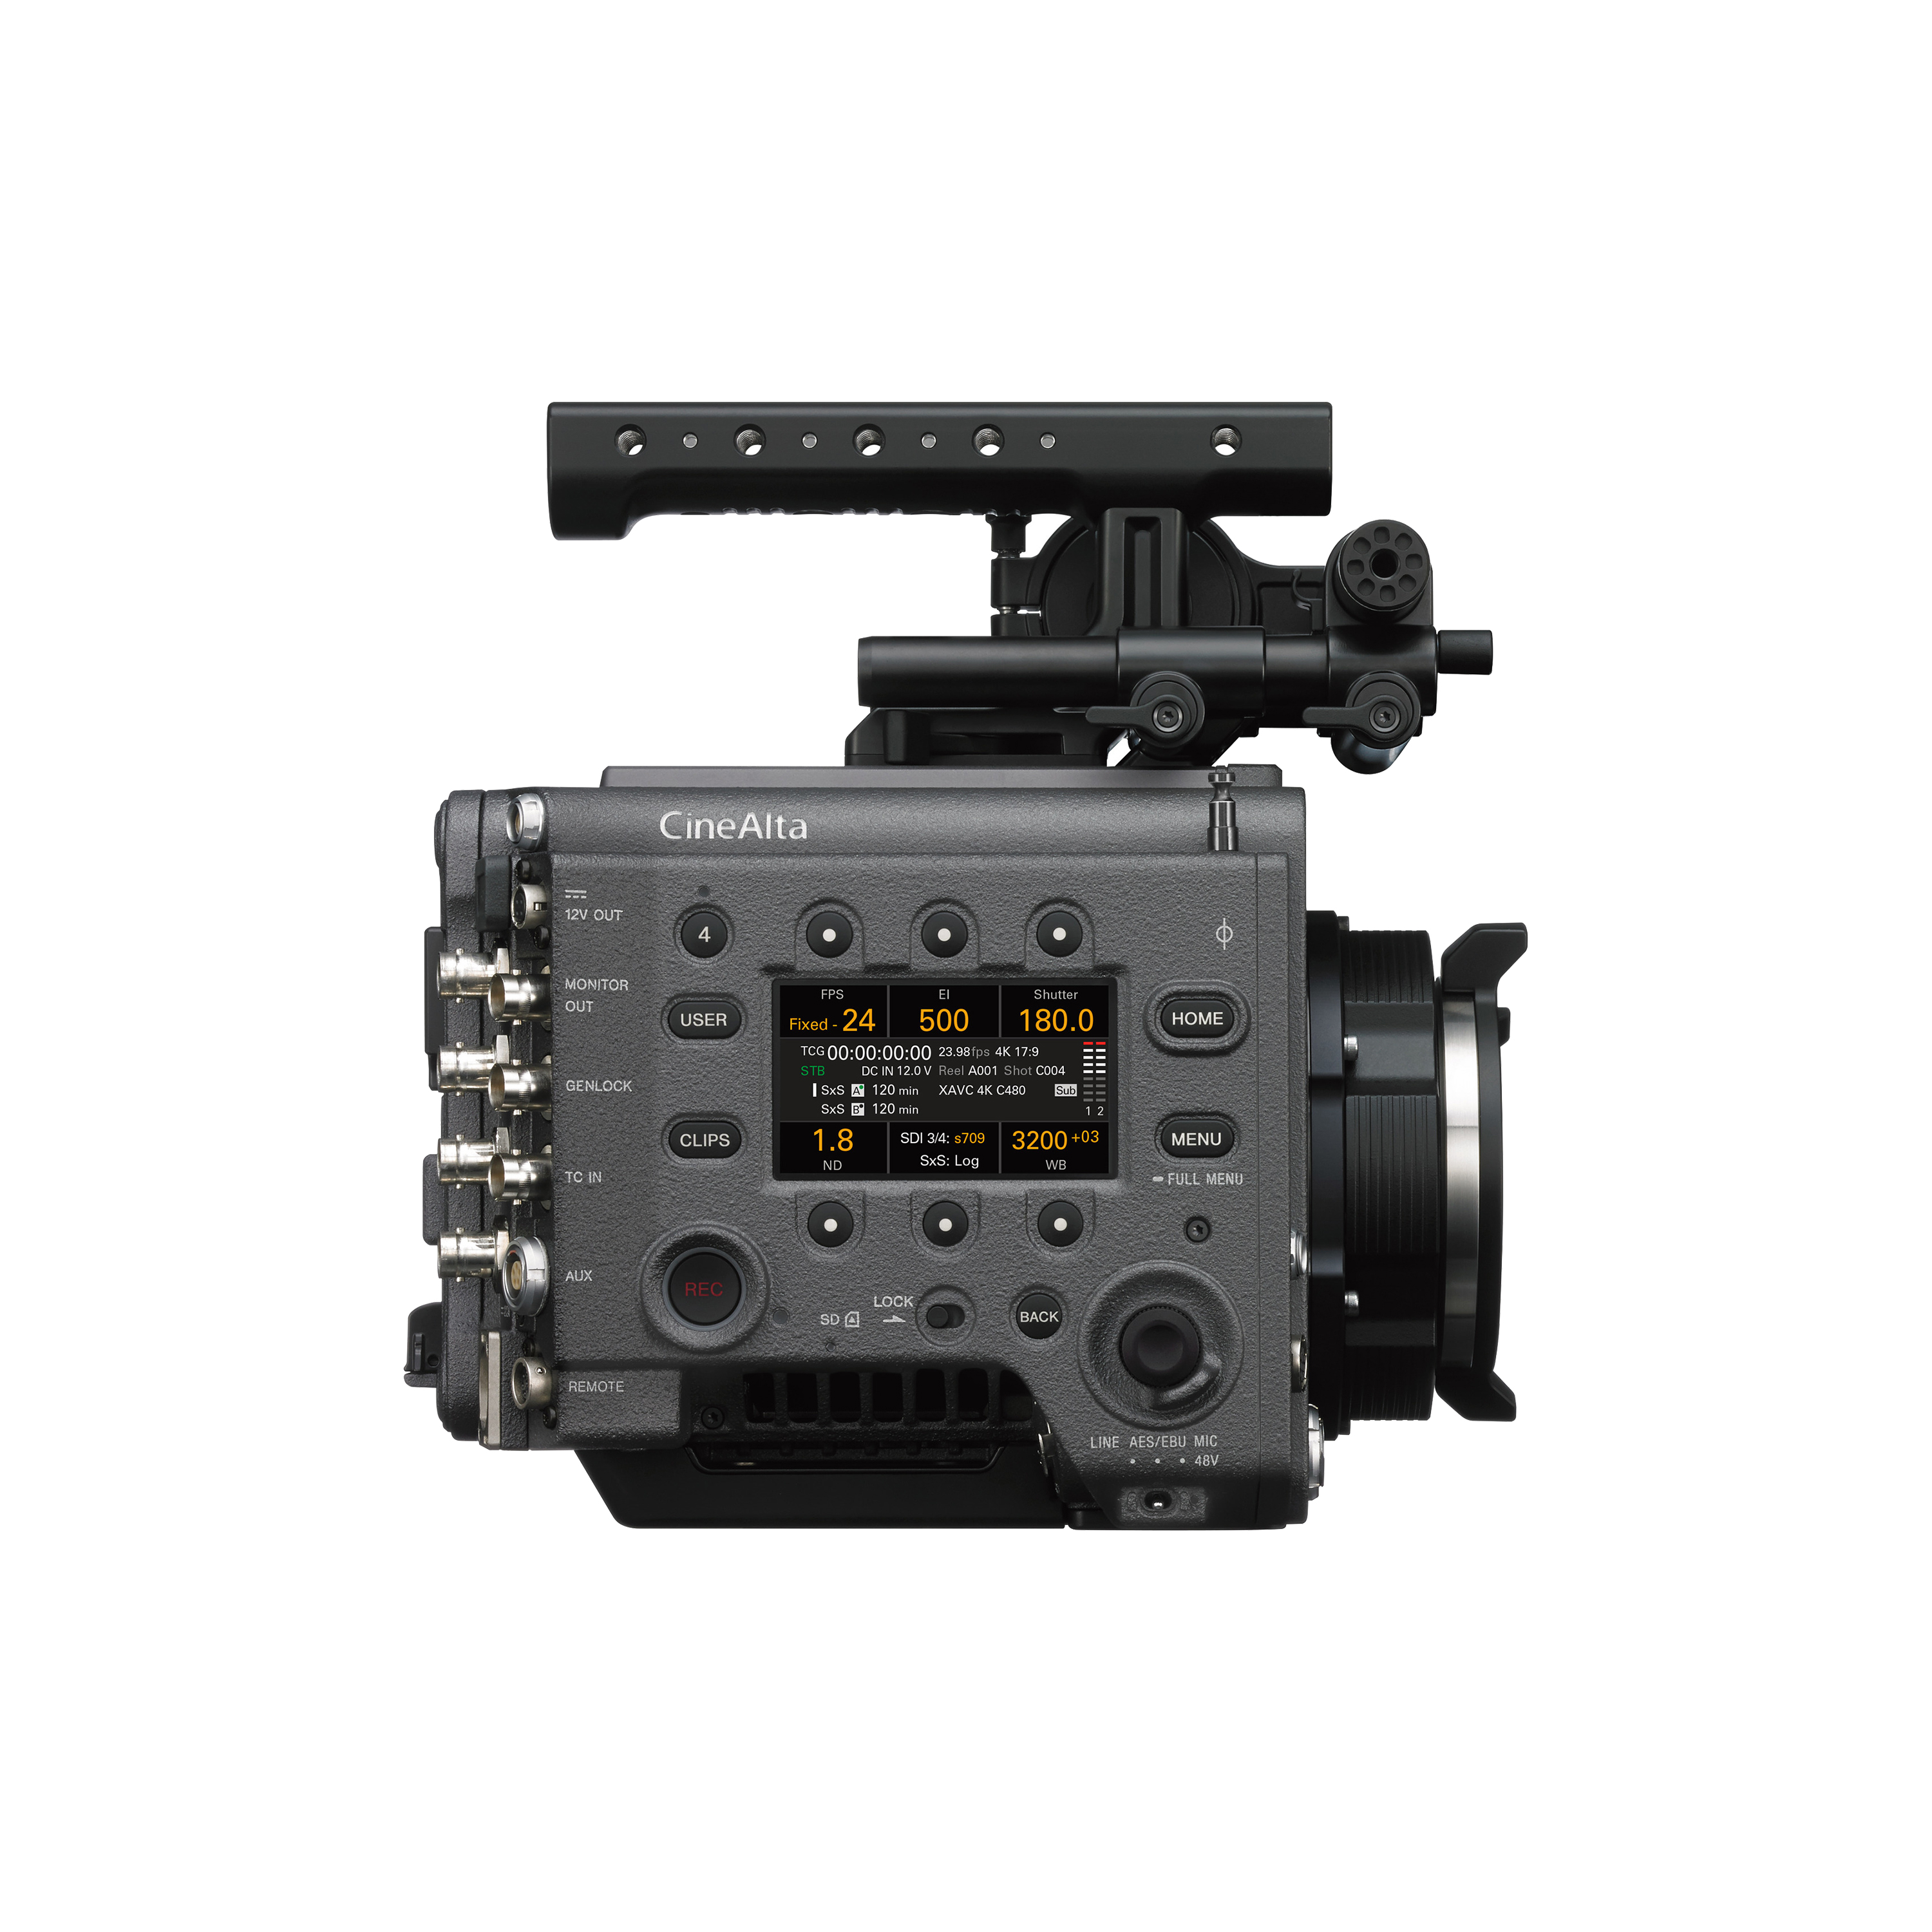 MPC-3610電影攝影機右側圖